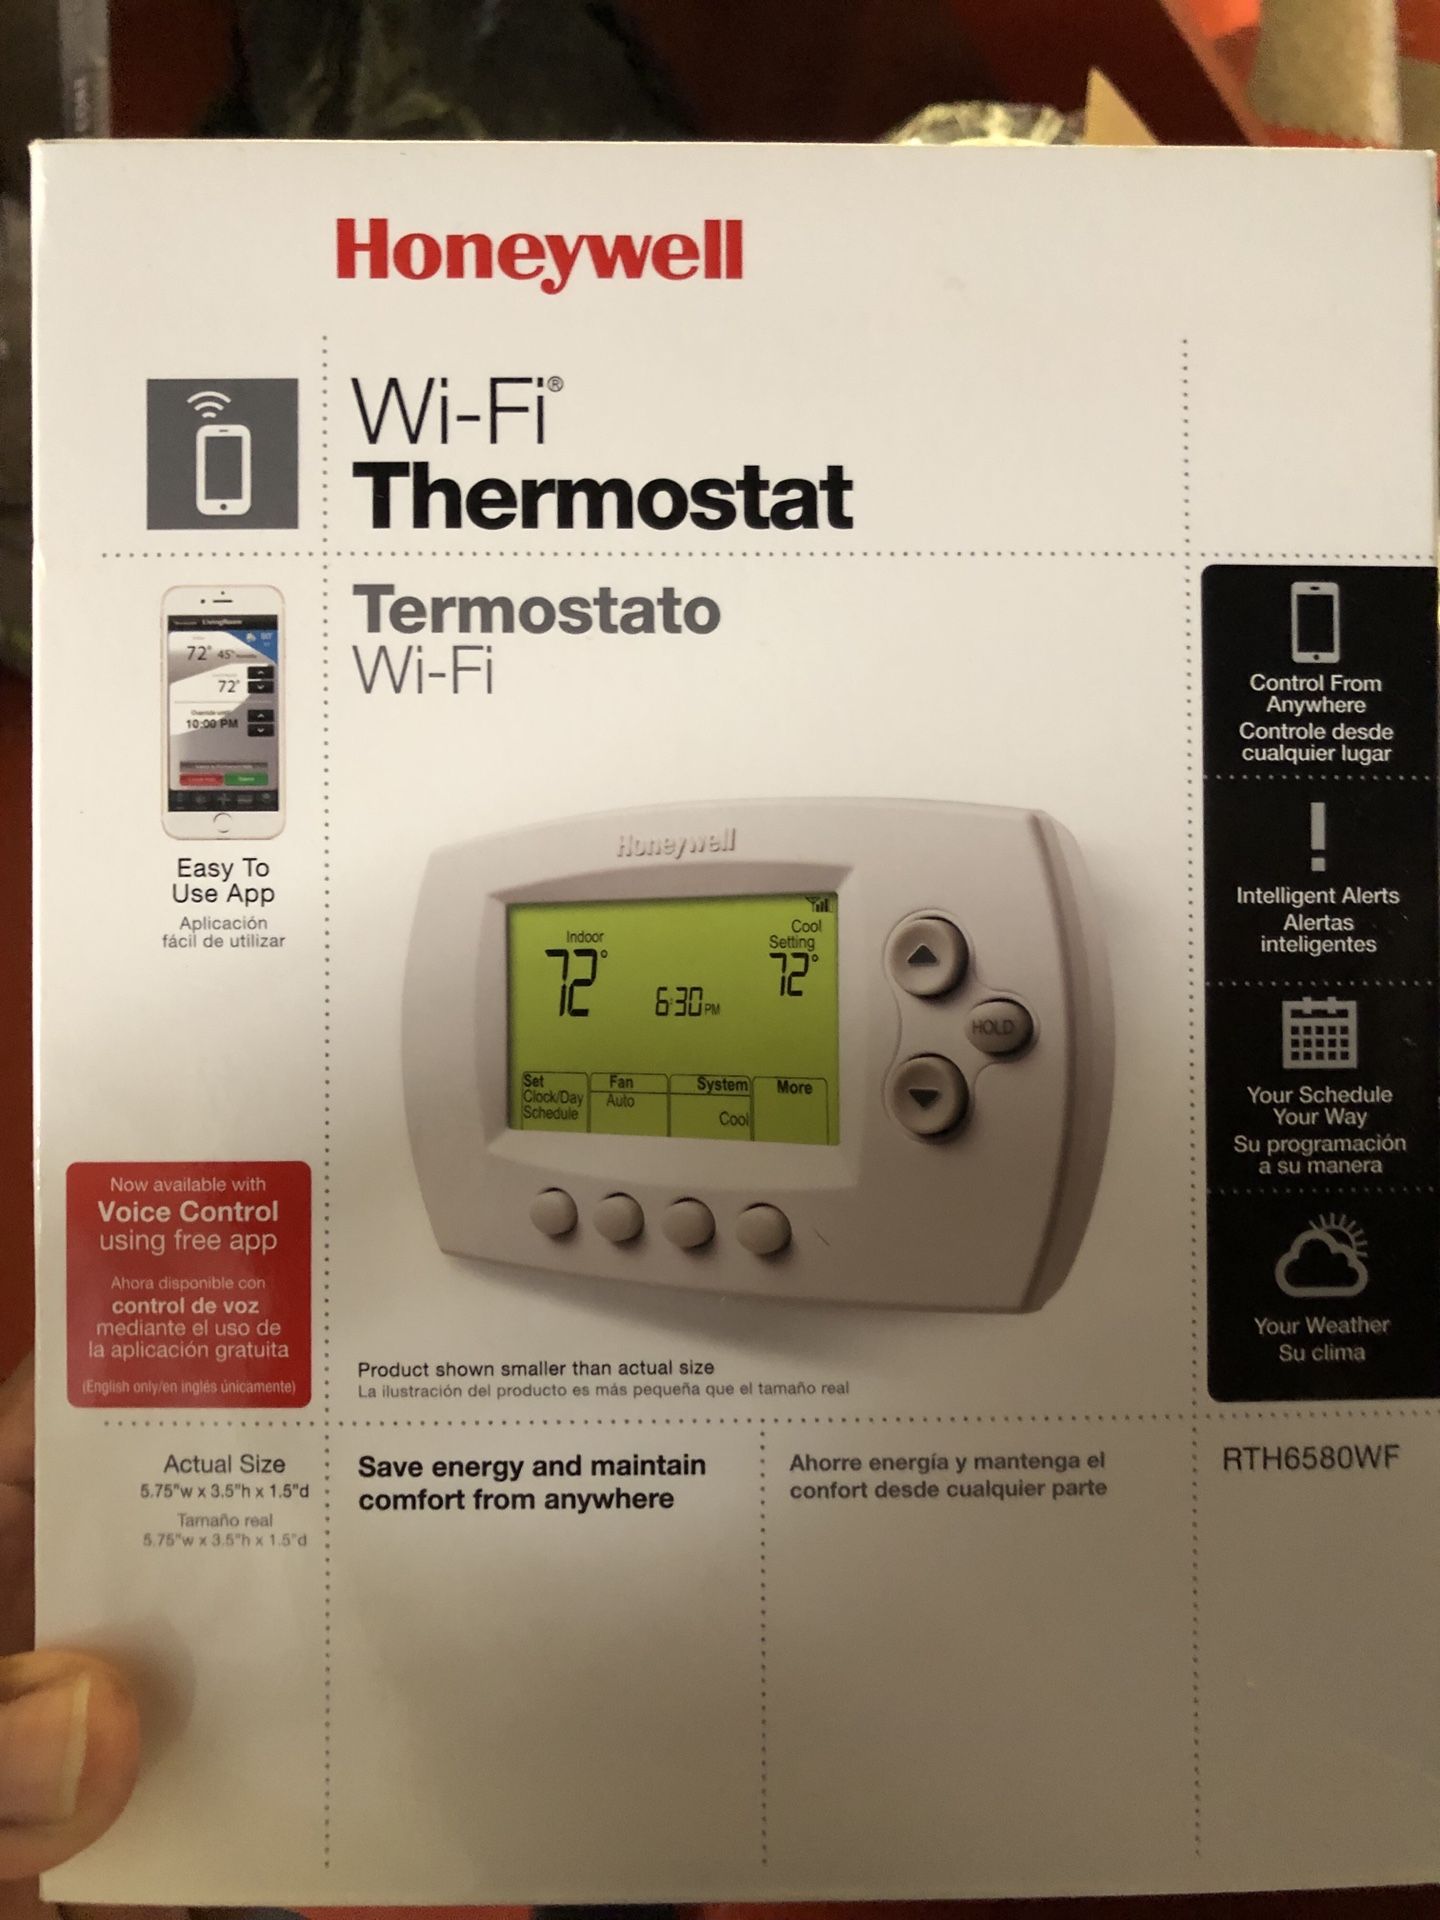 WiFi thermostat